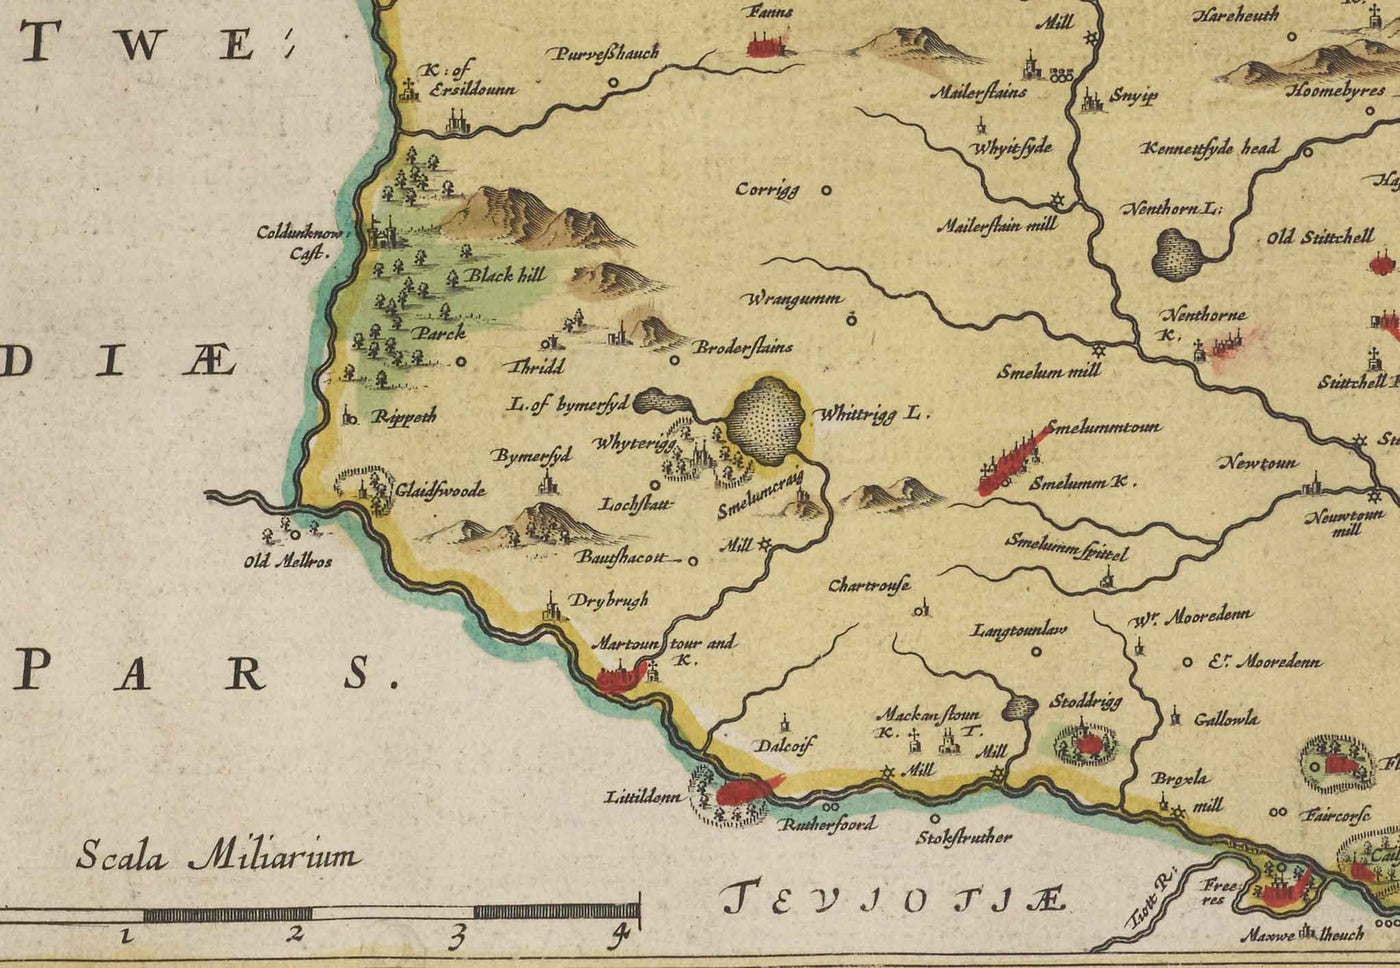 Ancienne carte du Berwickshire en 1665 par Joan Blaeu - Eyemouth, Ayton, Coldingham, Tweedmouth, Hutton